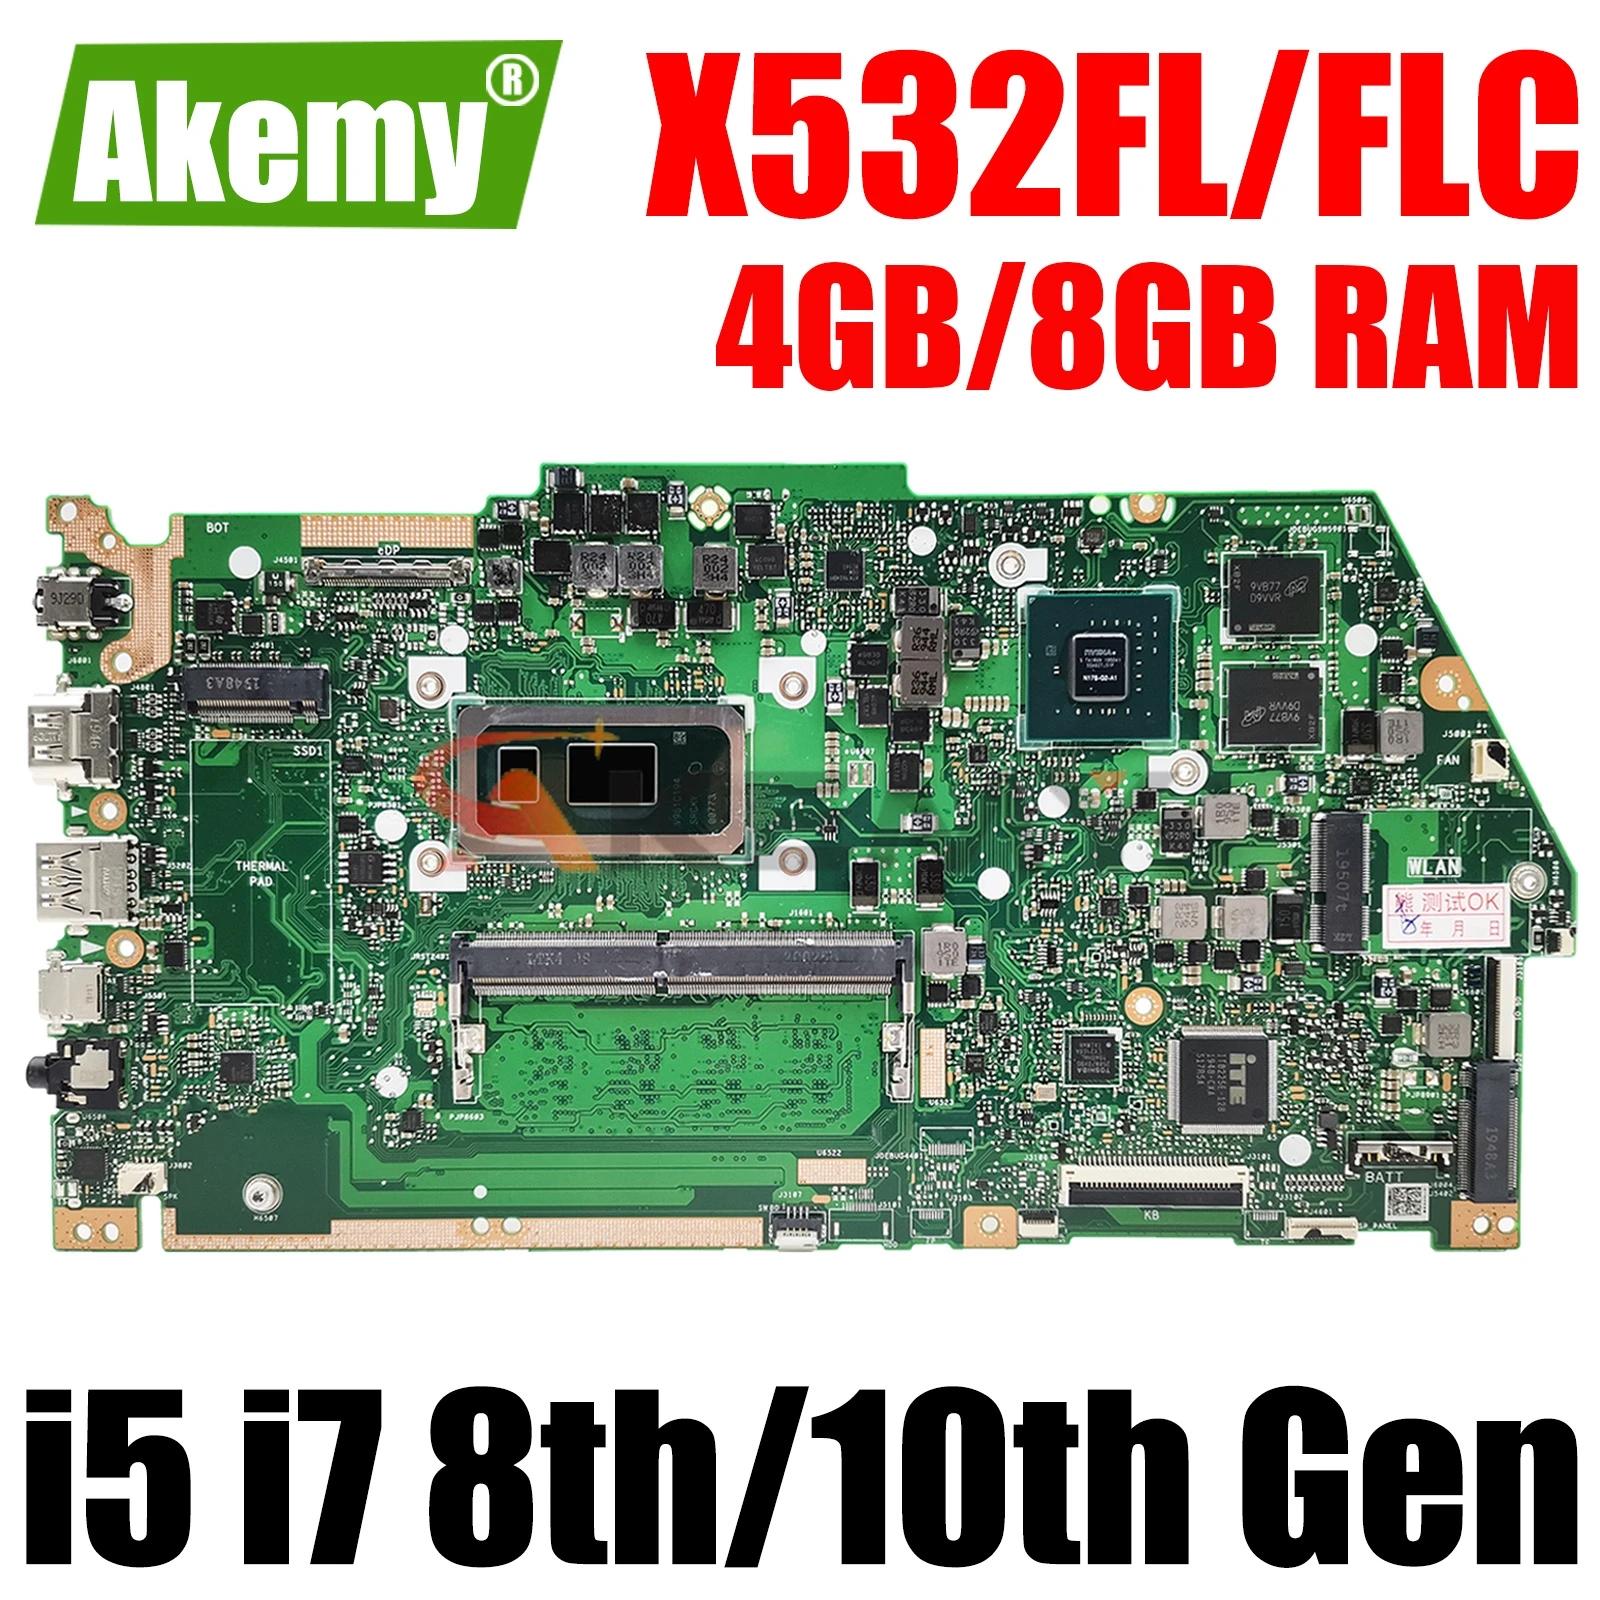 ASUS Ʈ , X532FL, X532FLC, S532F, K531F, S531F, X532F, X531FL, X532FA, i5, i7, 8 , 10  CPU, 4GB, 8GB RAM